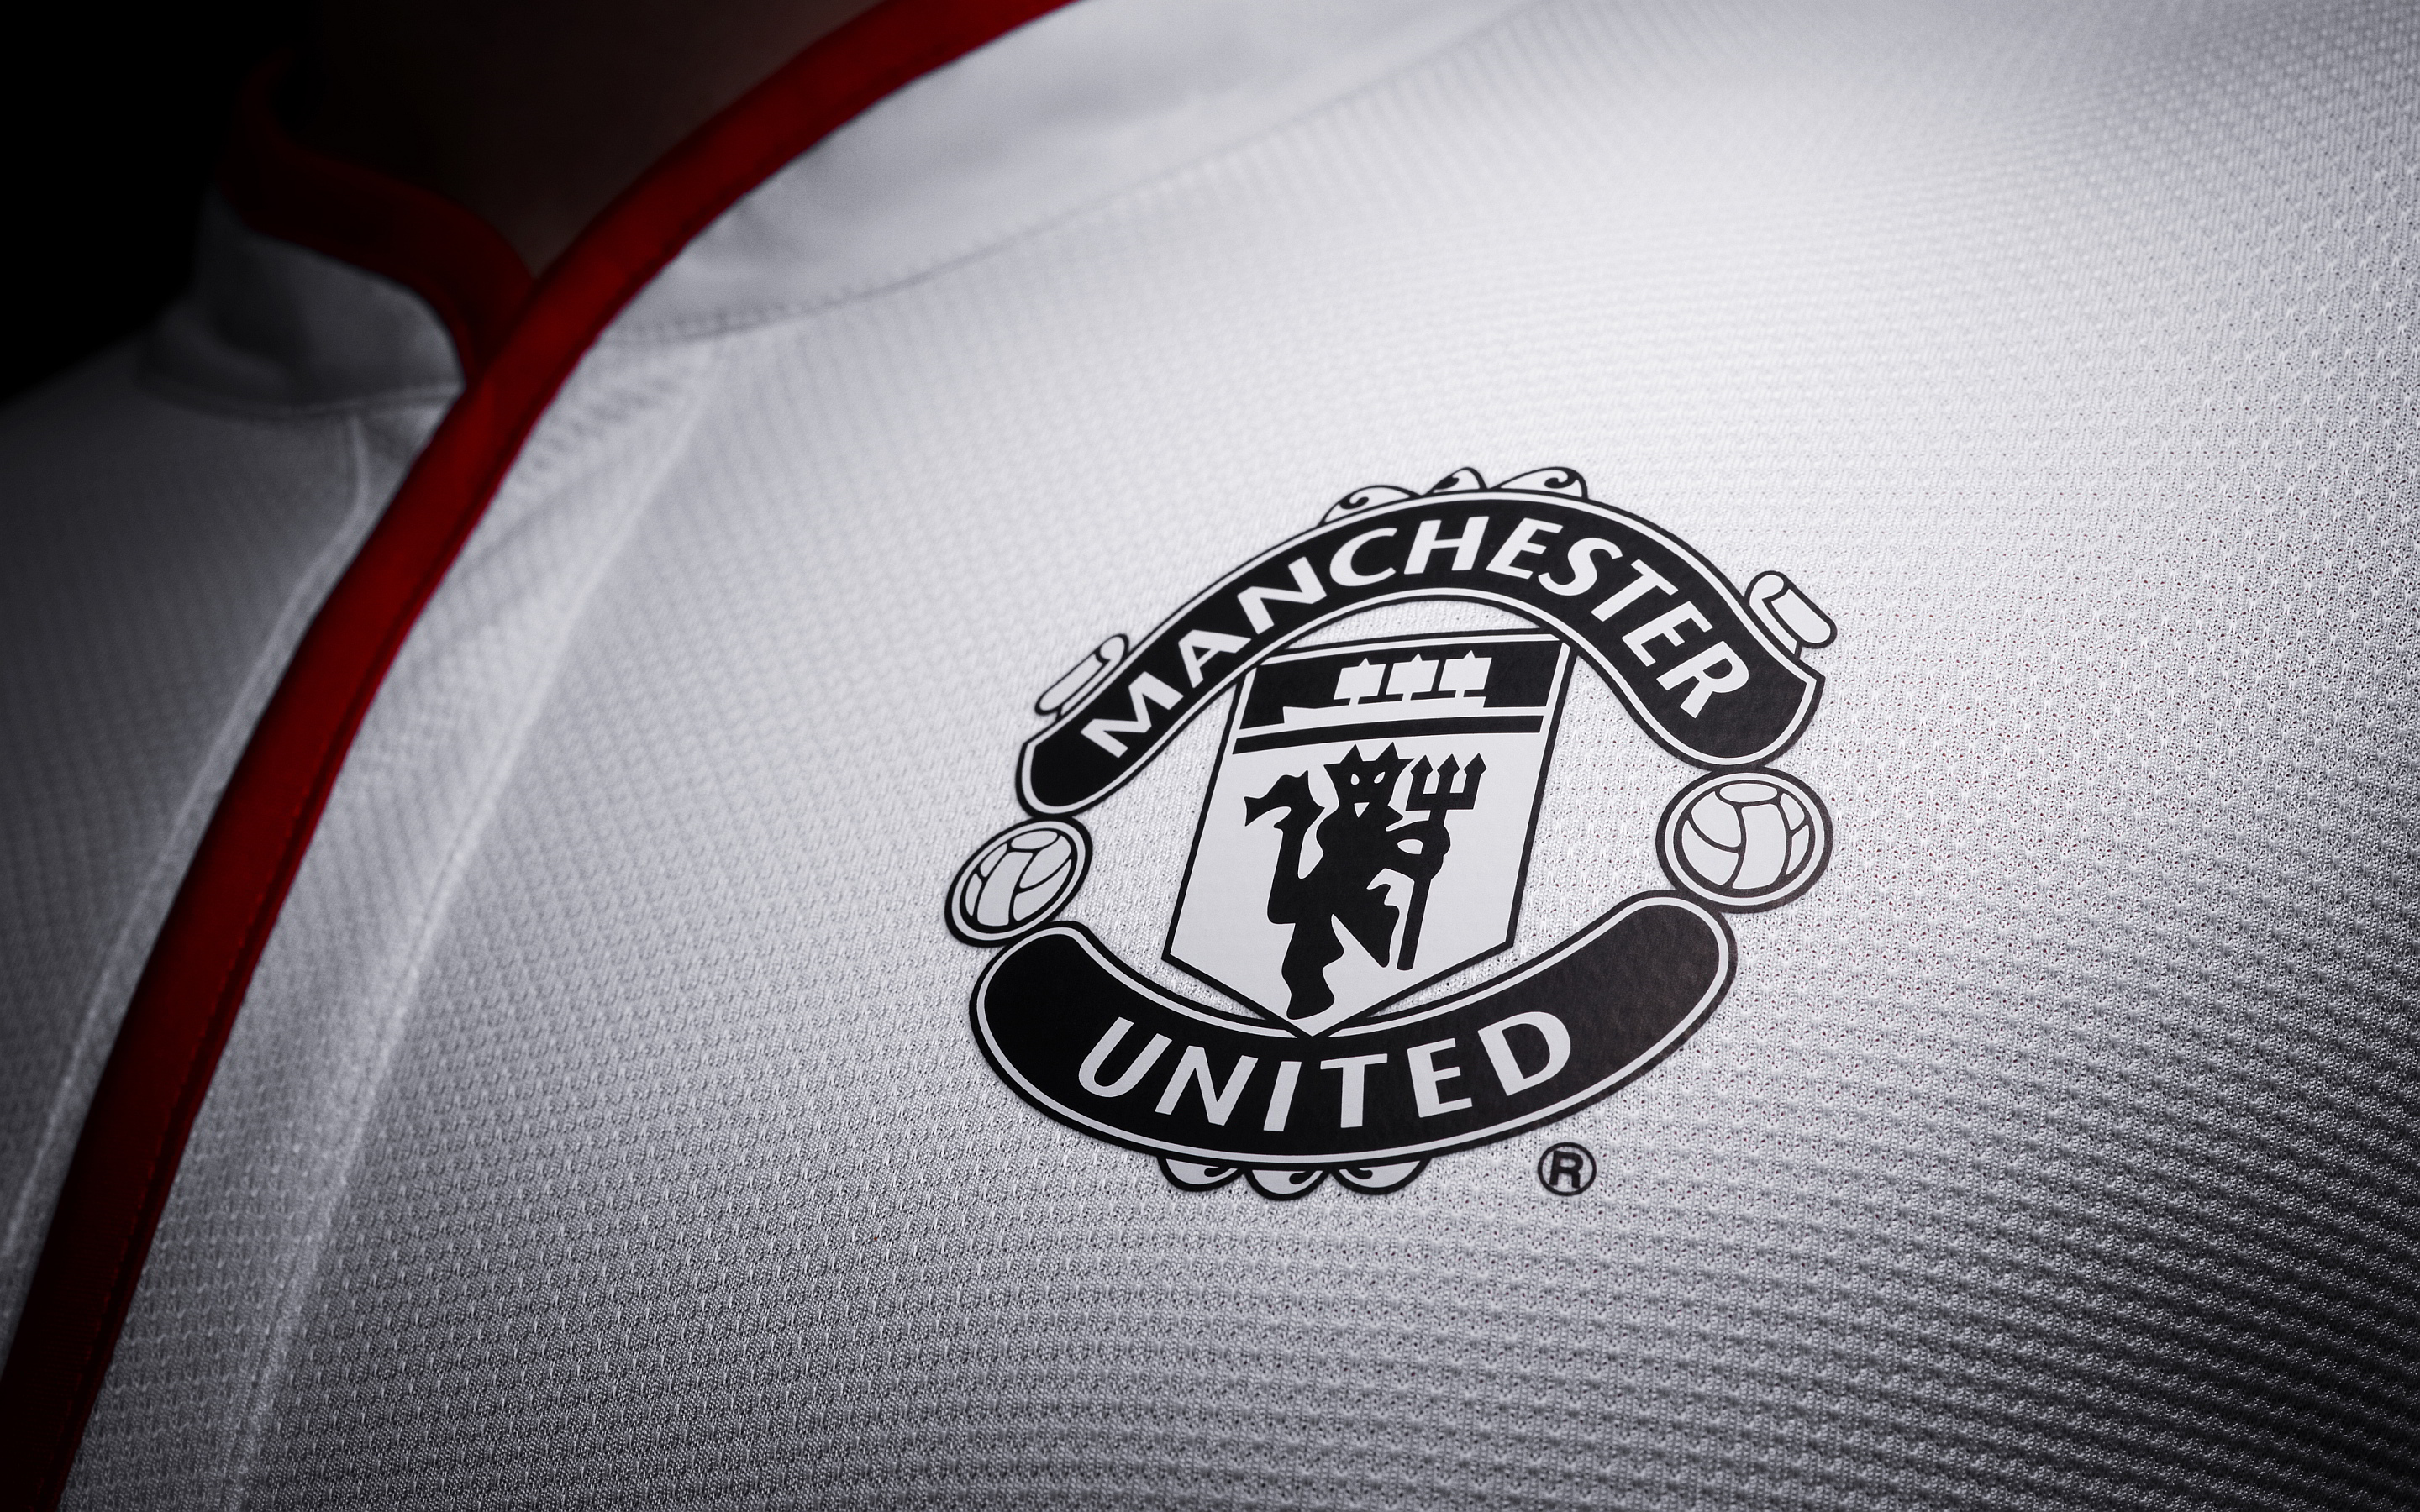 Manchester united away shirt